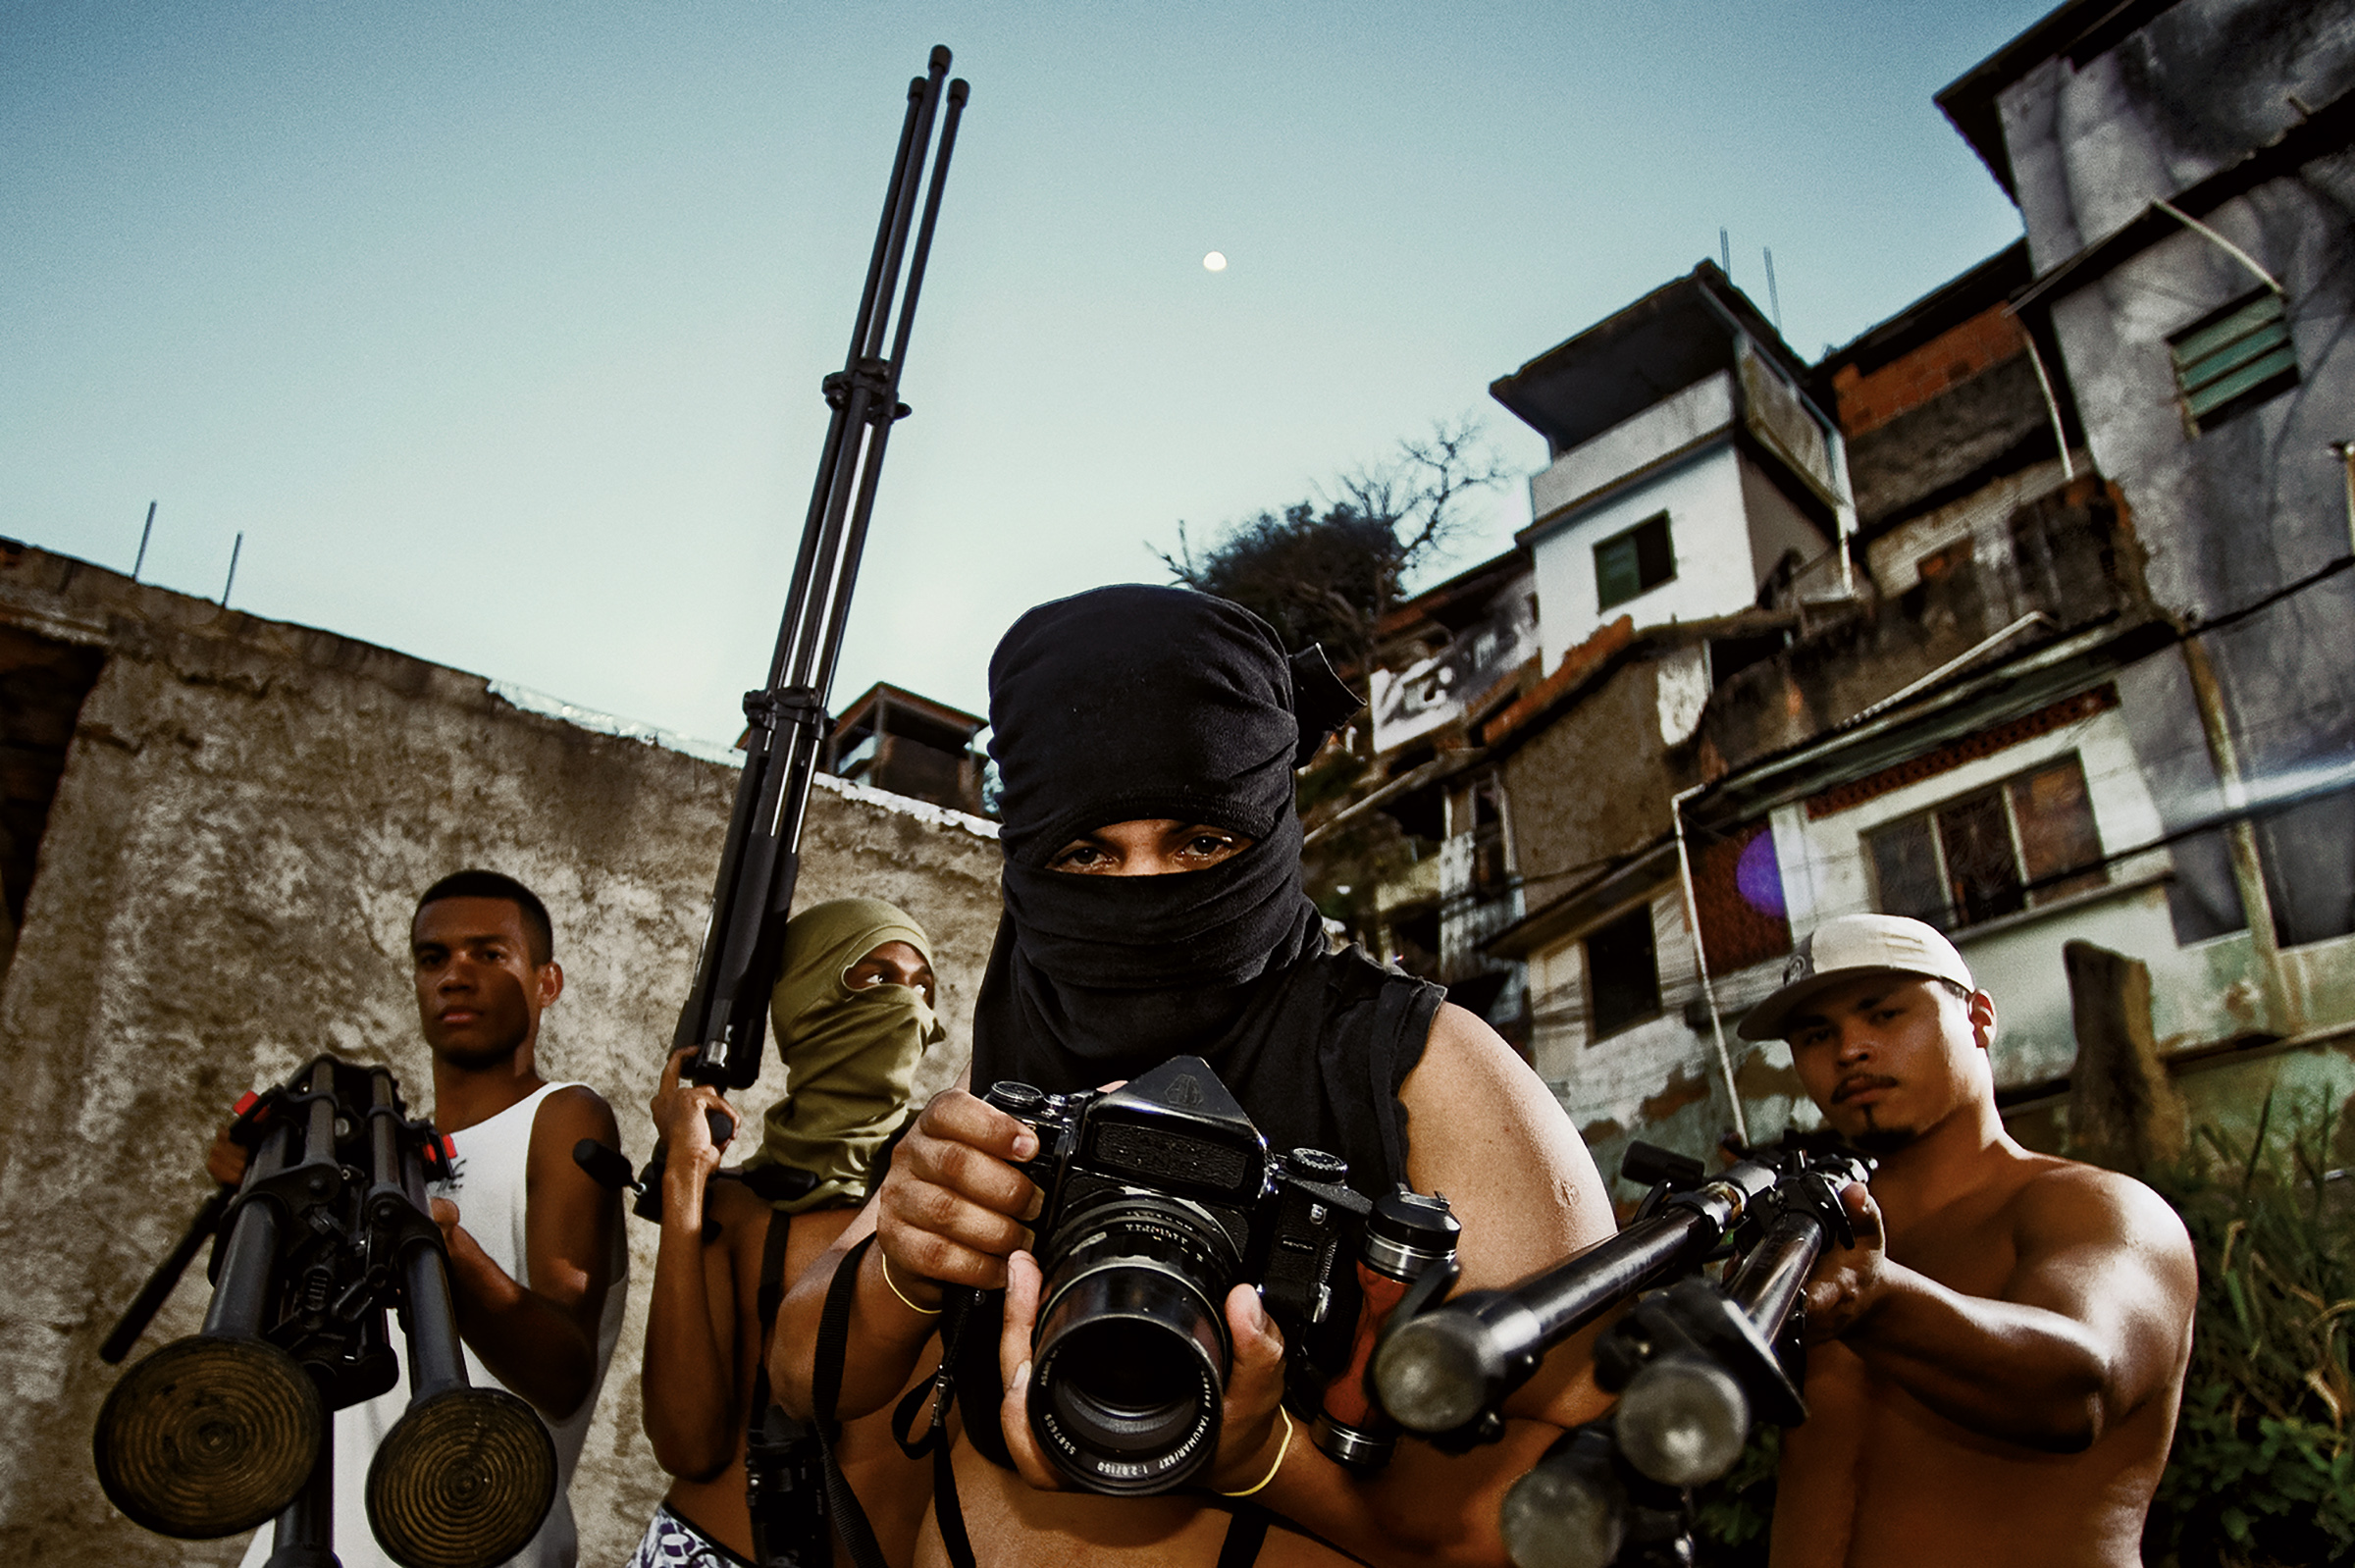 28 millimeters, Women are Heroes, Action in Morro Da Providencia Favela, Rio de Janeiro, 2008 © JR